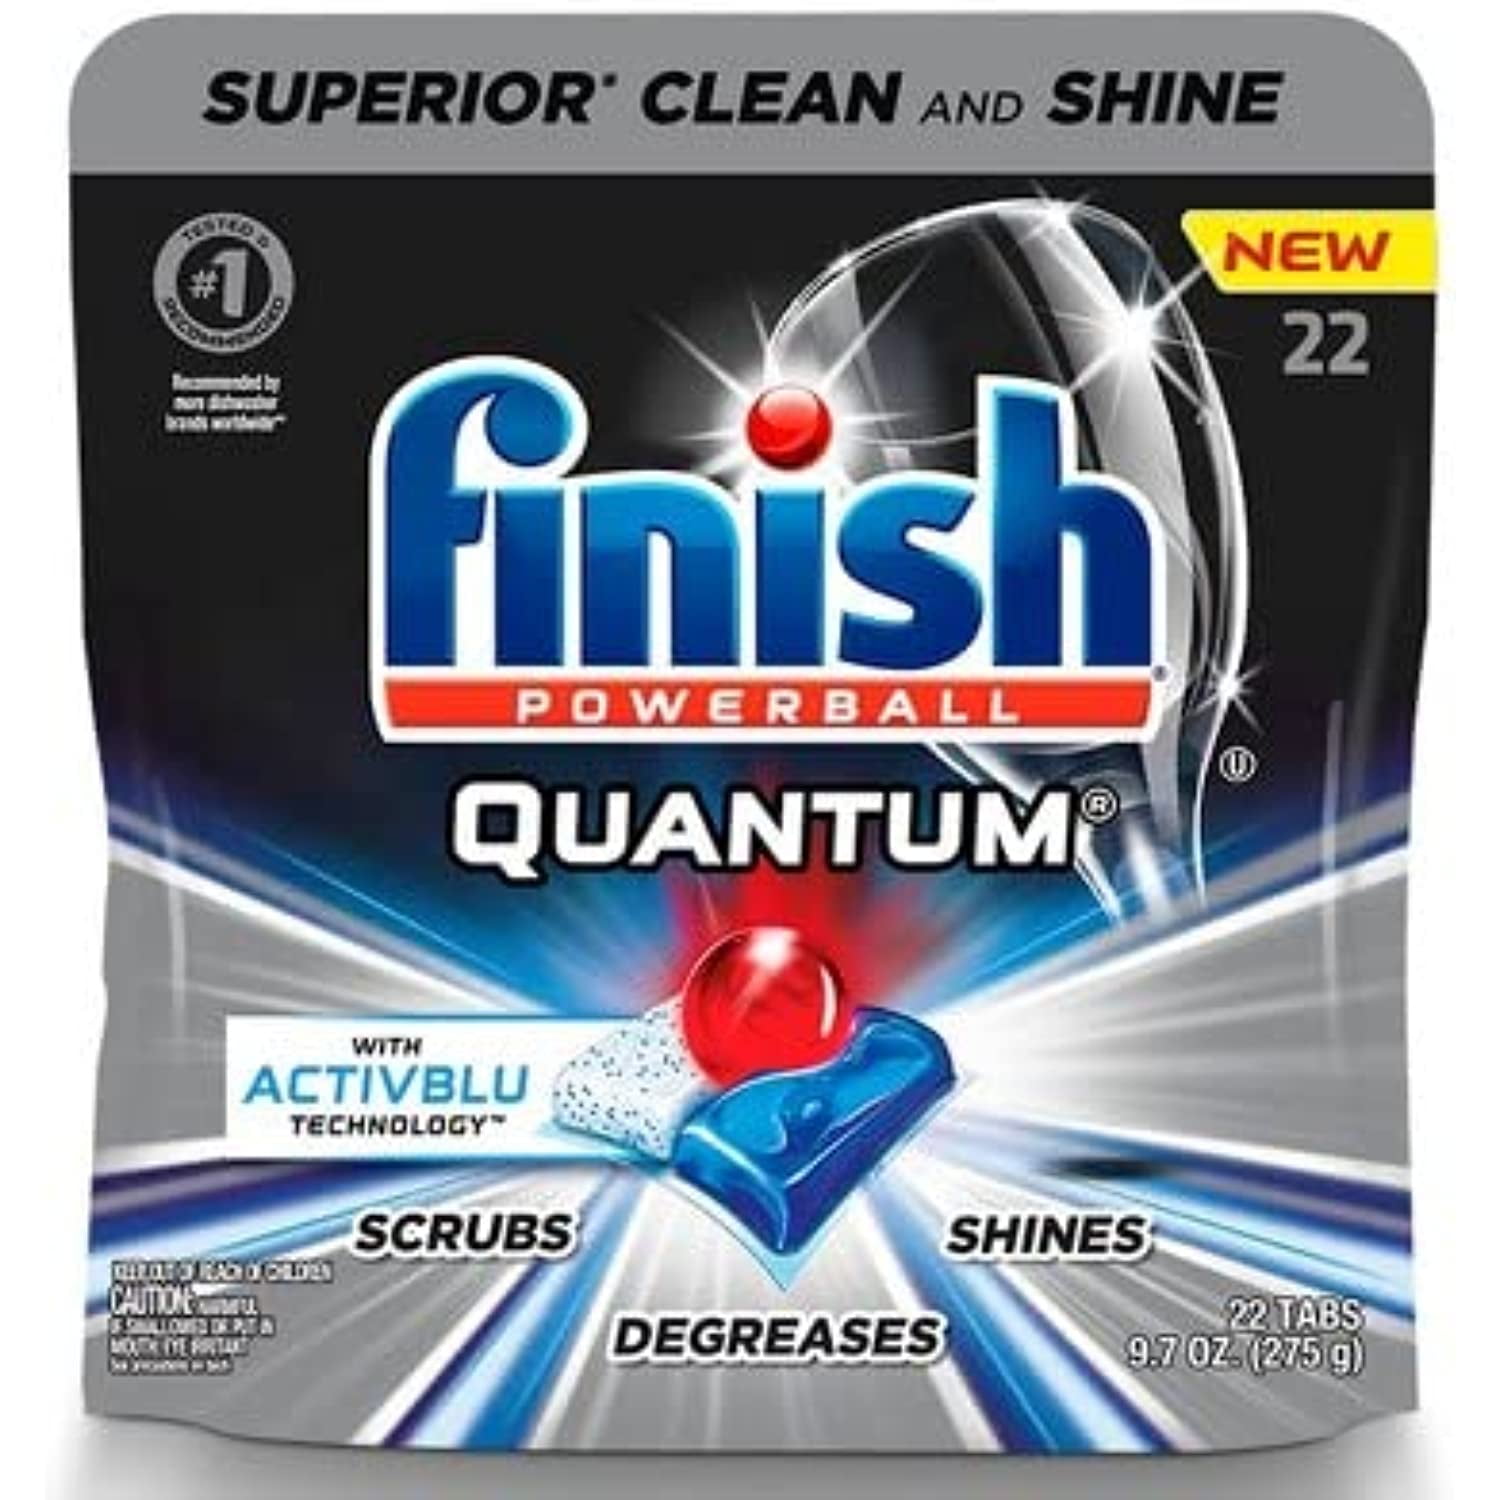 Finish Powerball Quantum Ultimate Dishwasher Tablets, Original